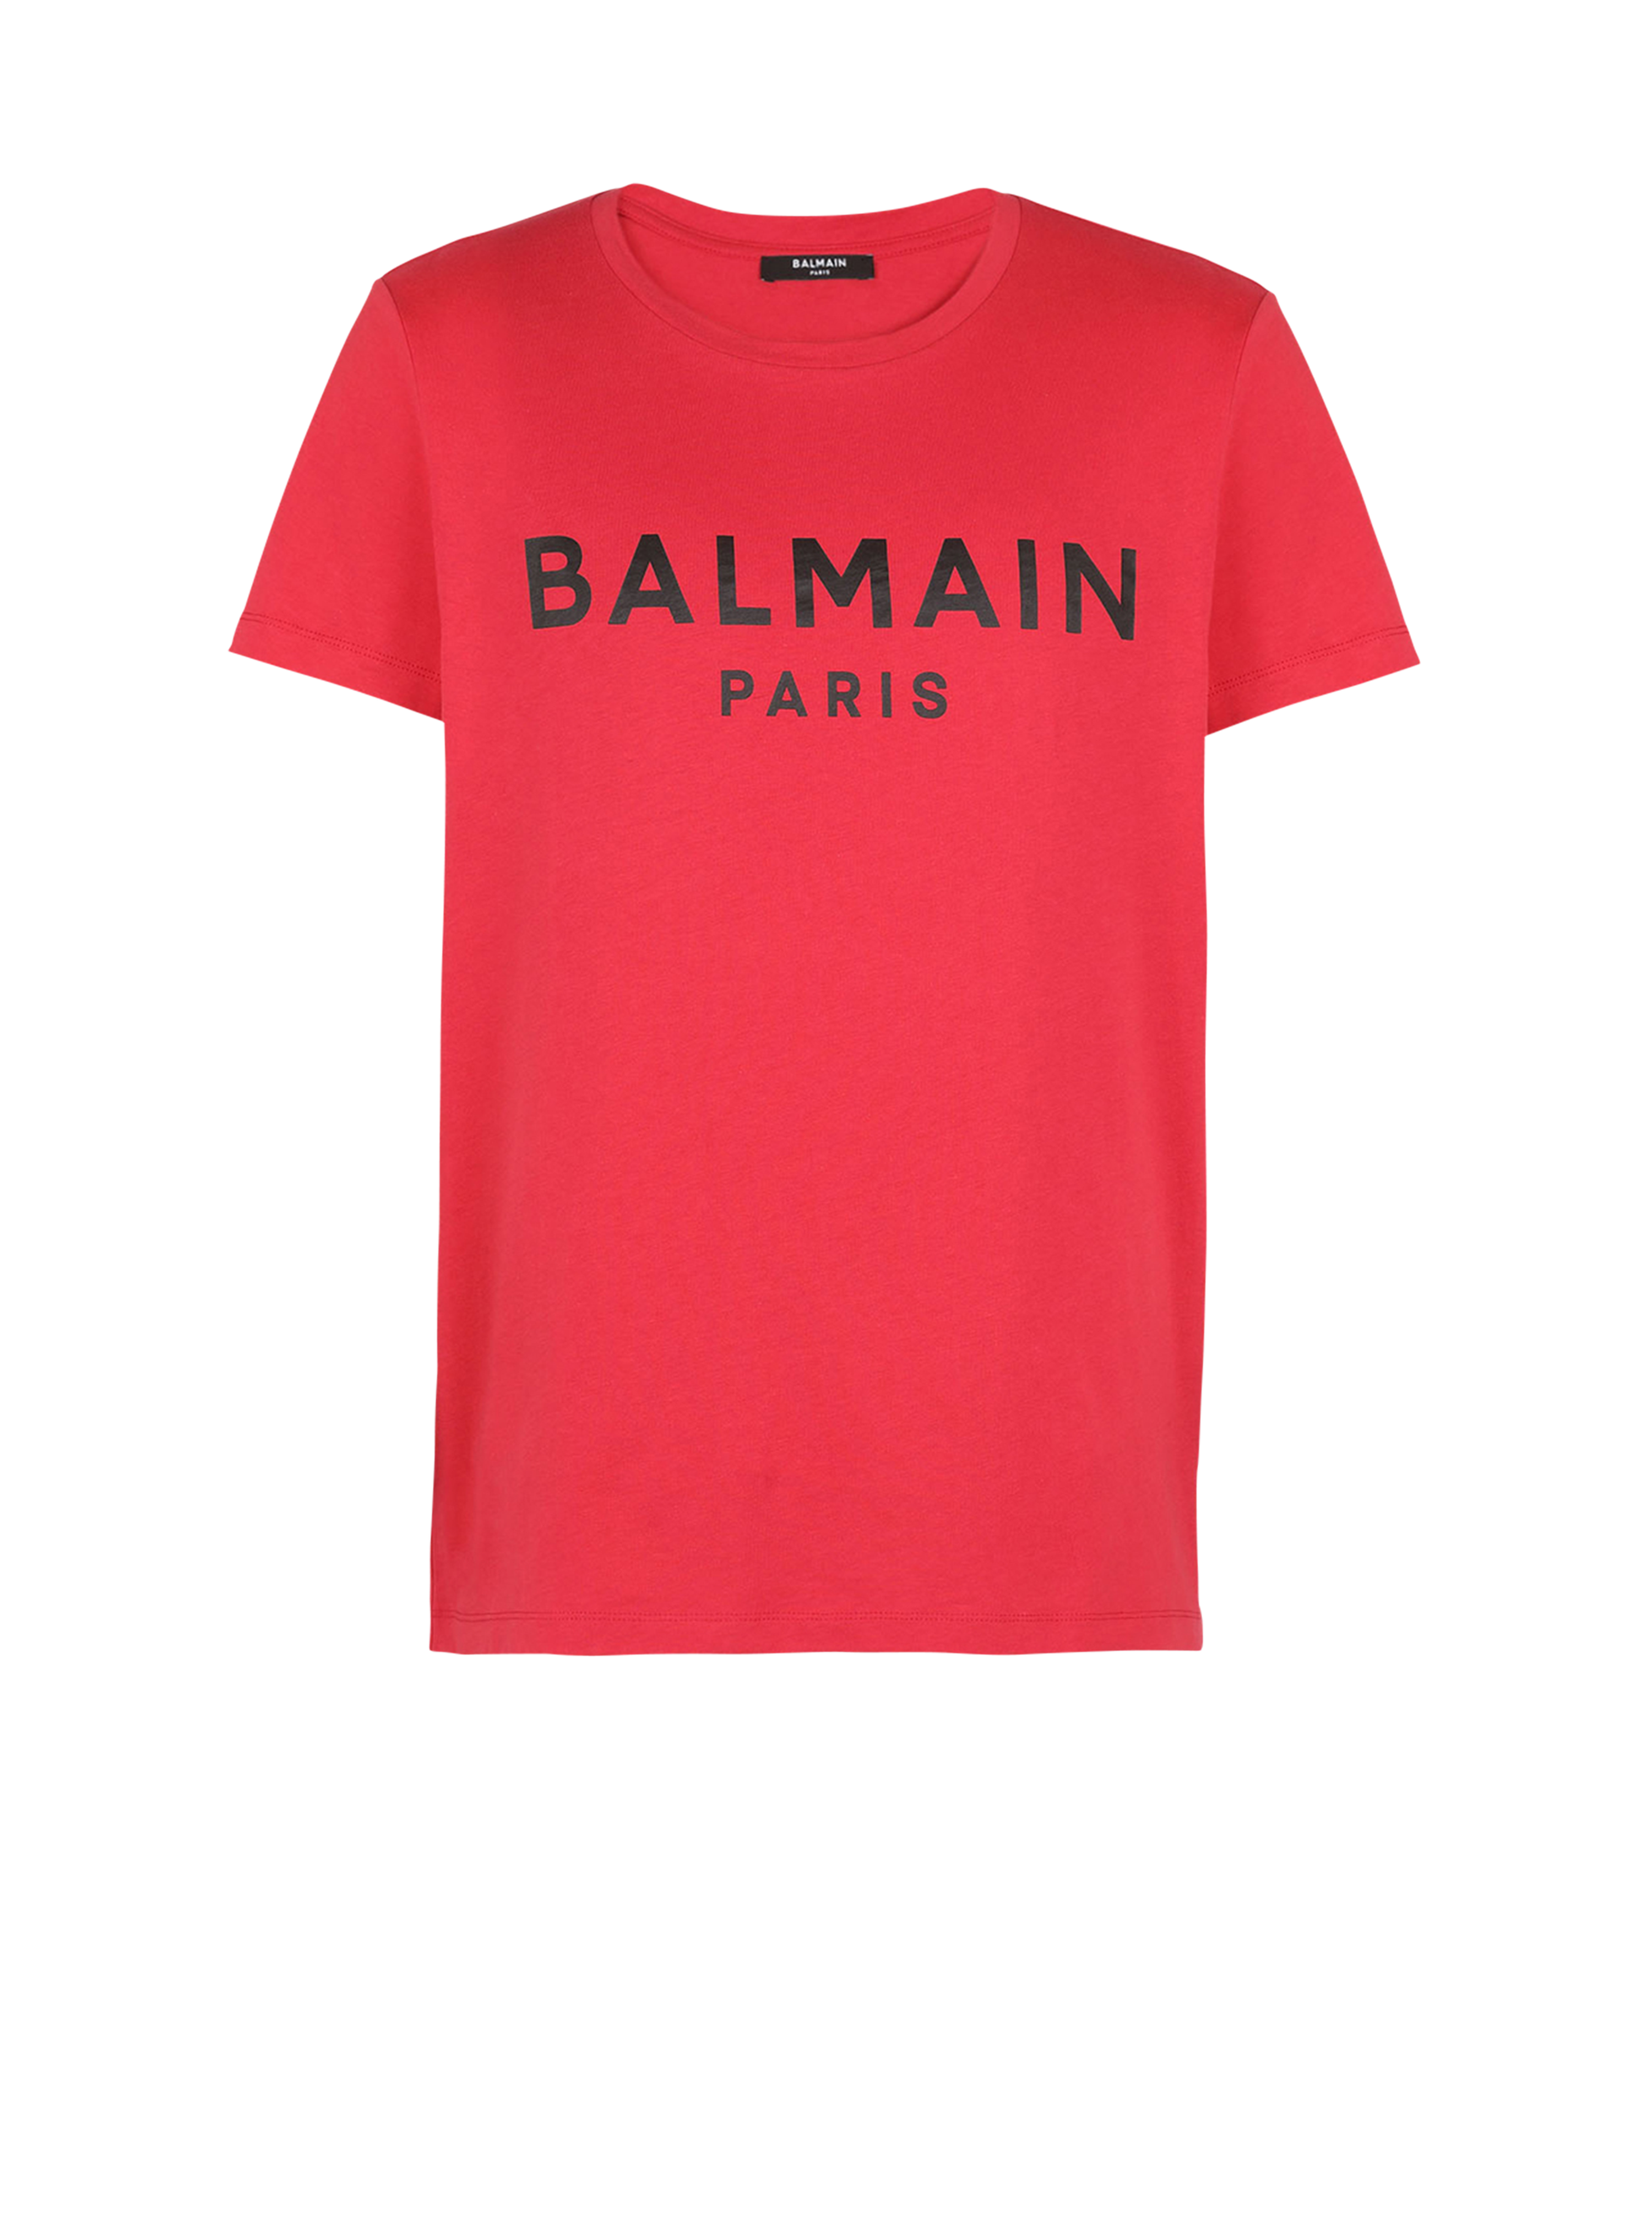 Eco-designed cotton T-shirt with Balmain Paris logo print, red